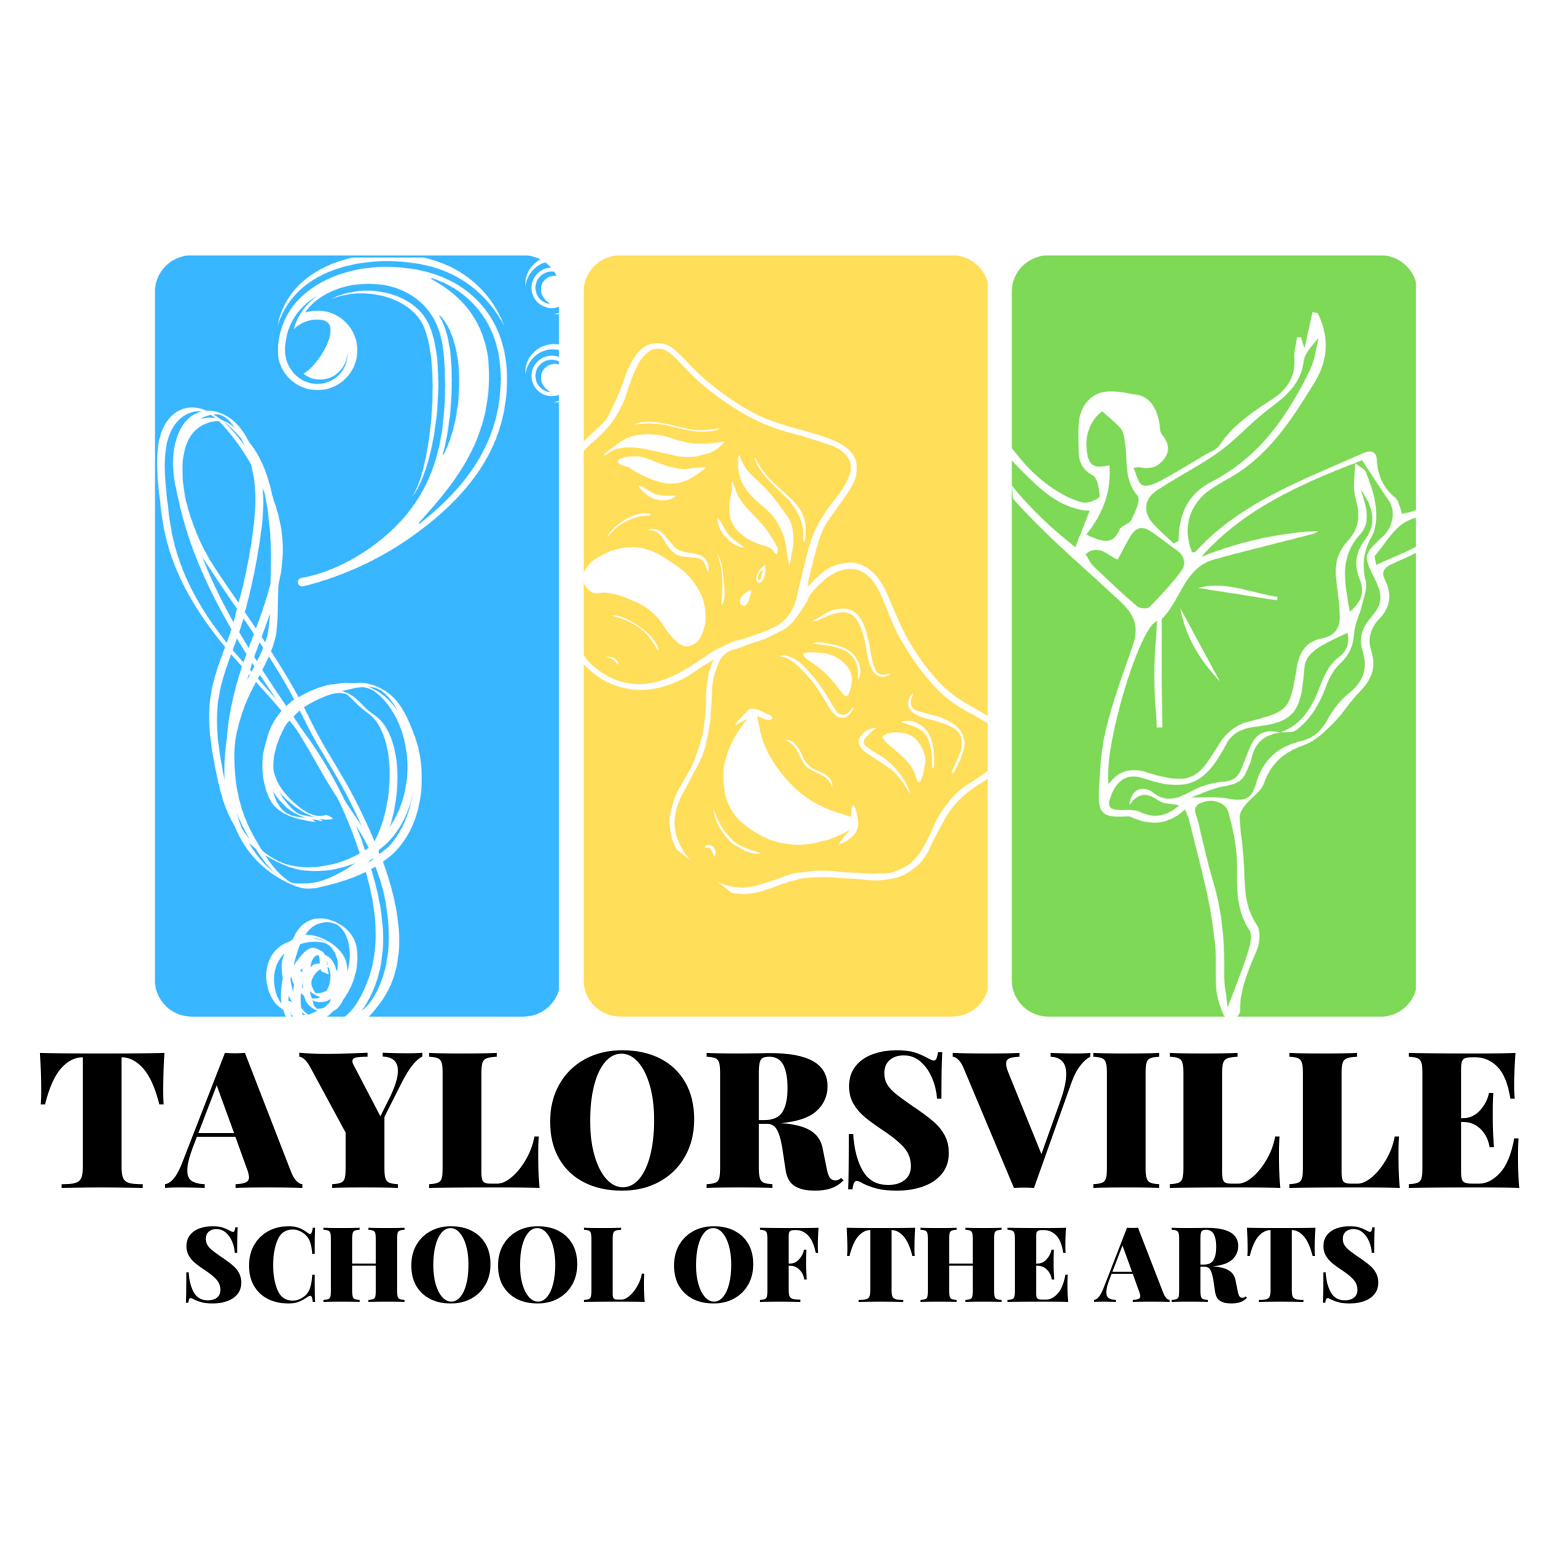 Taylorsville School of the Arts